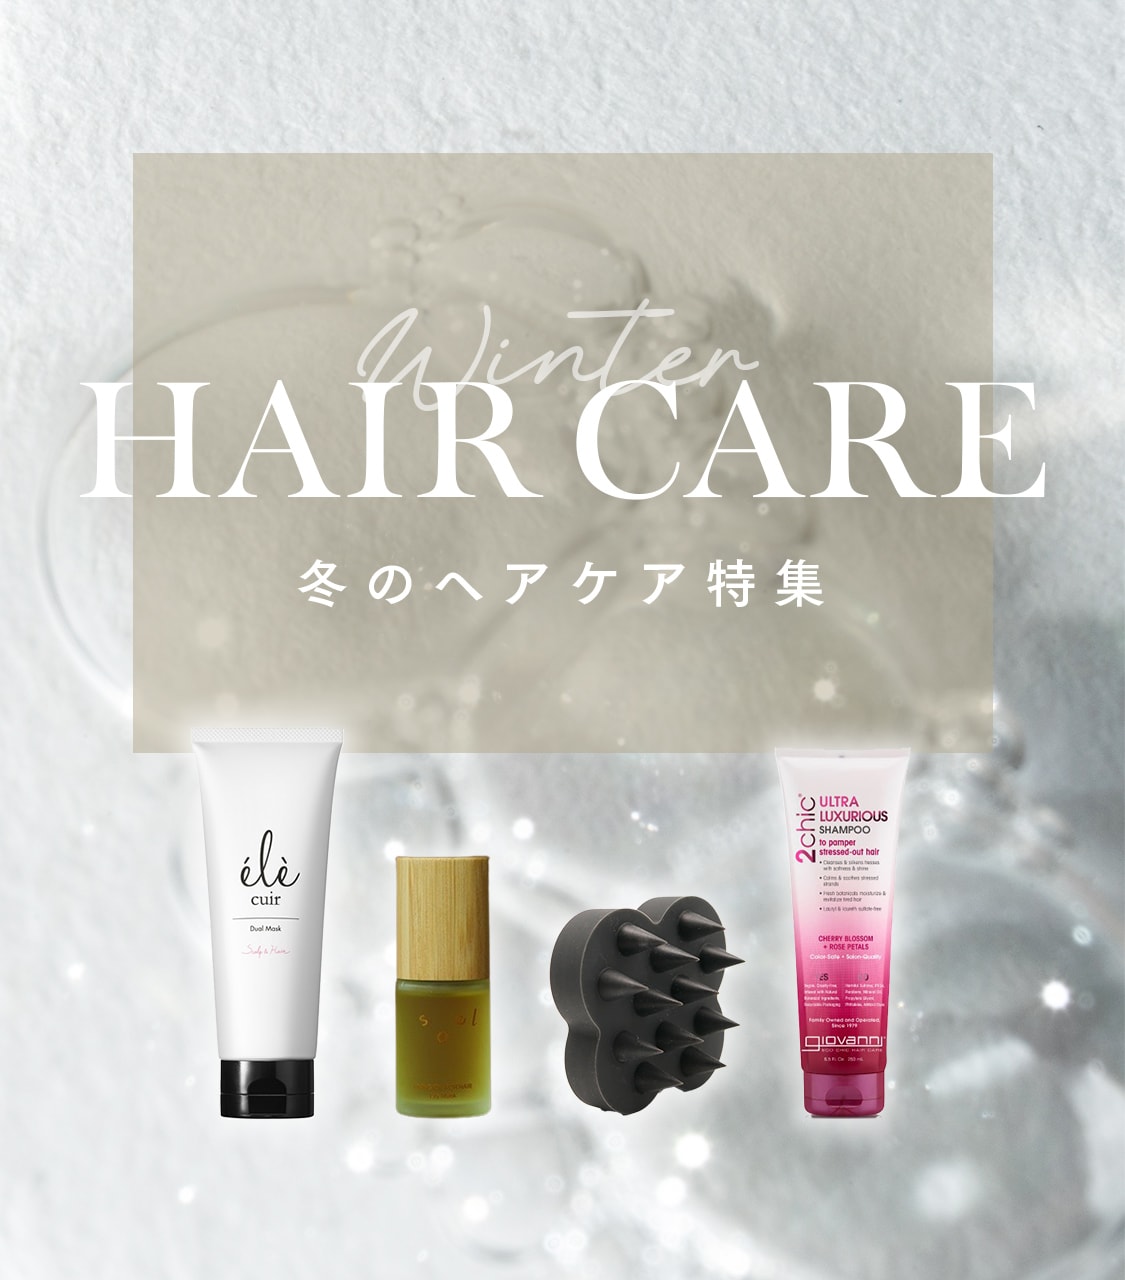 Winter Hair Care 冬のヘアケア特集